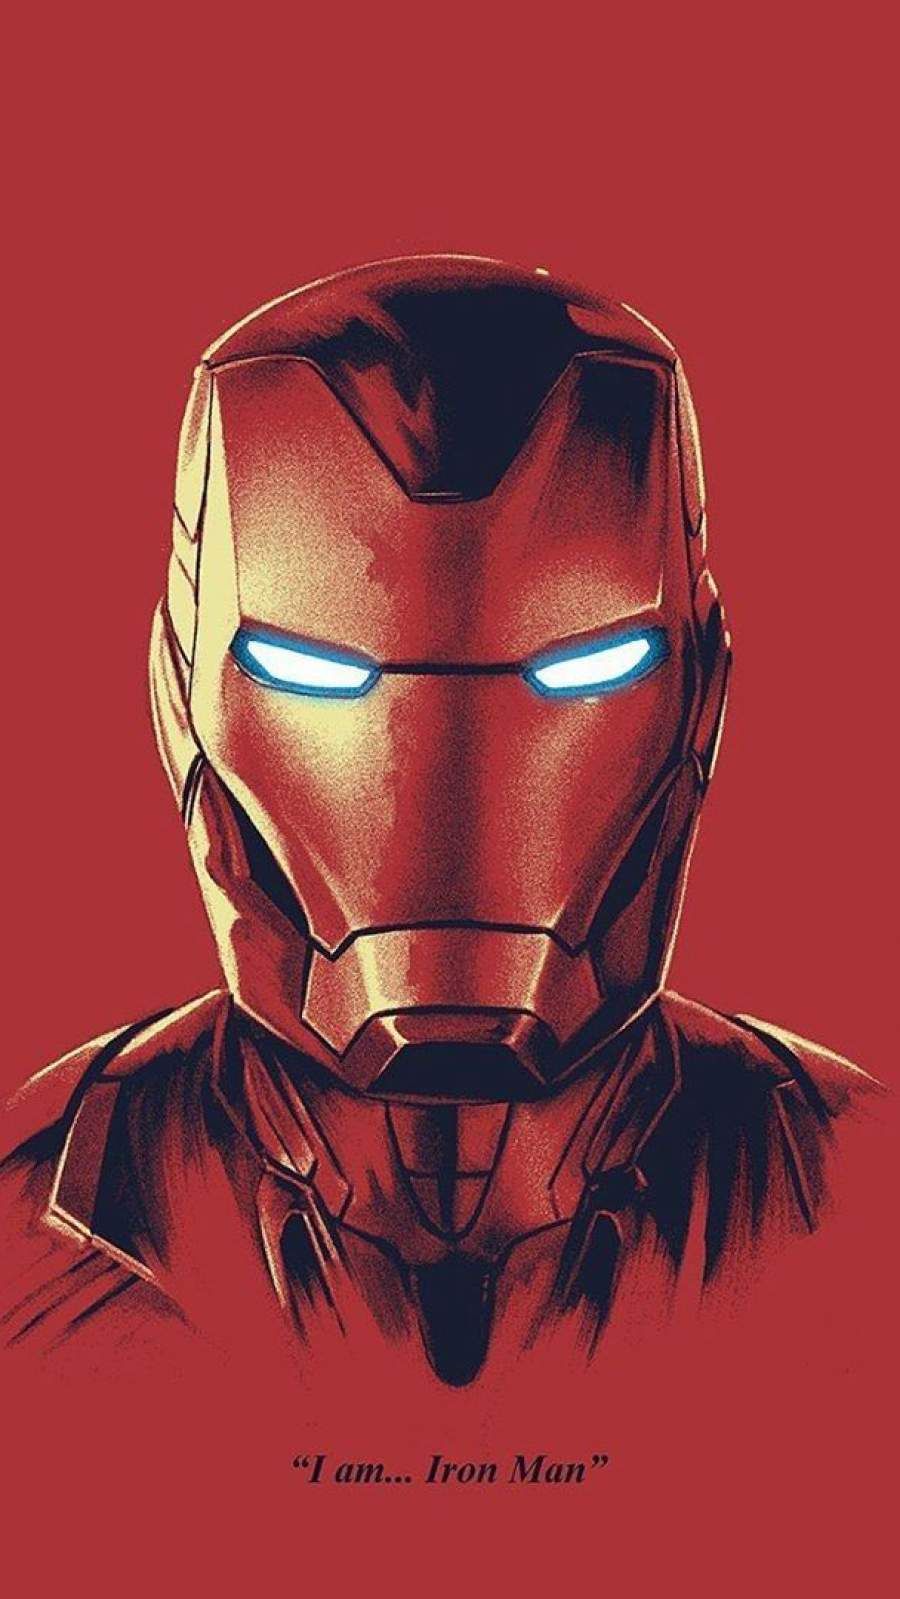 I am Iron Man Mark 85 Armor iPhone Wallpaper. Iron man, Iron man art, Iron man avengers